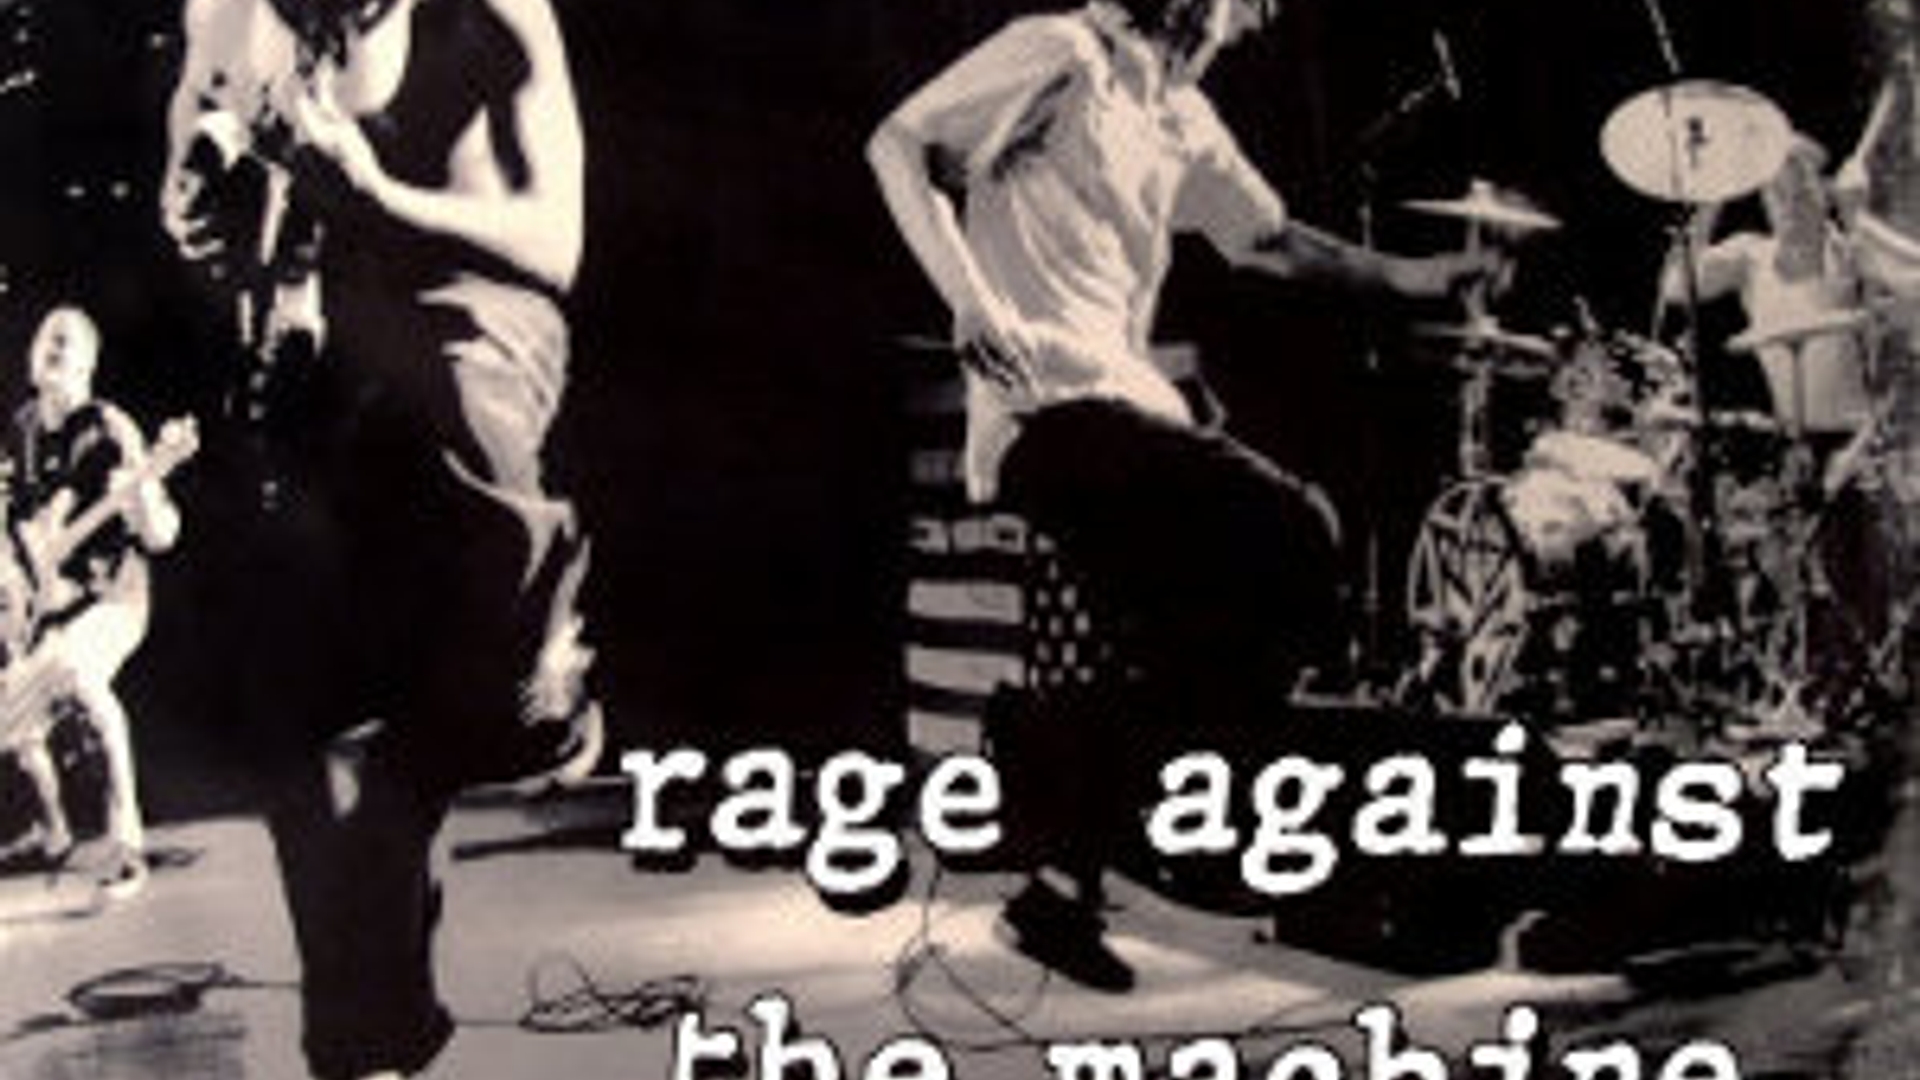 rage-against-the-machine-photo.jpg